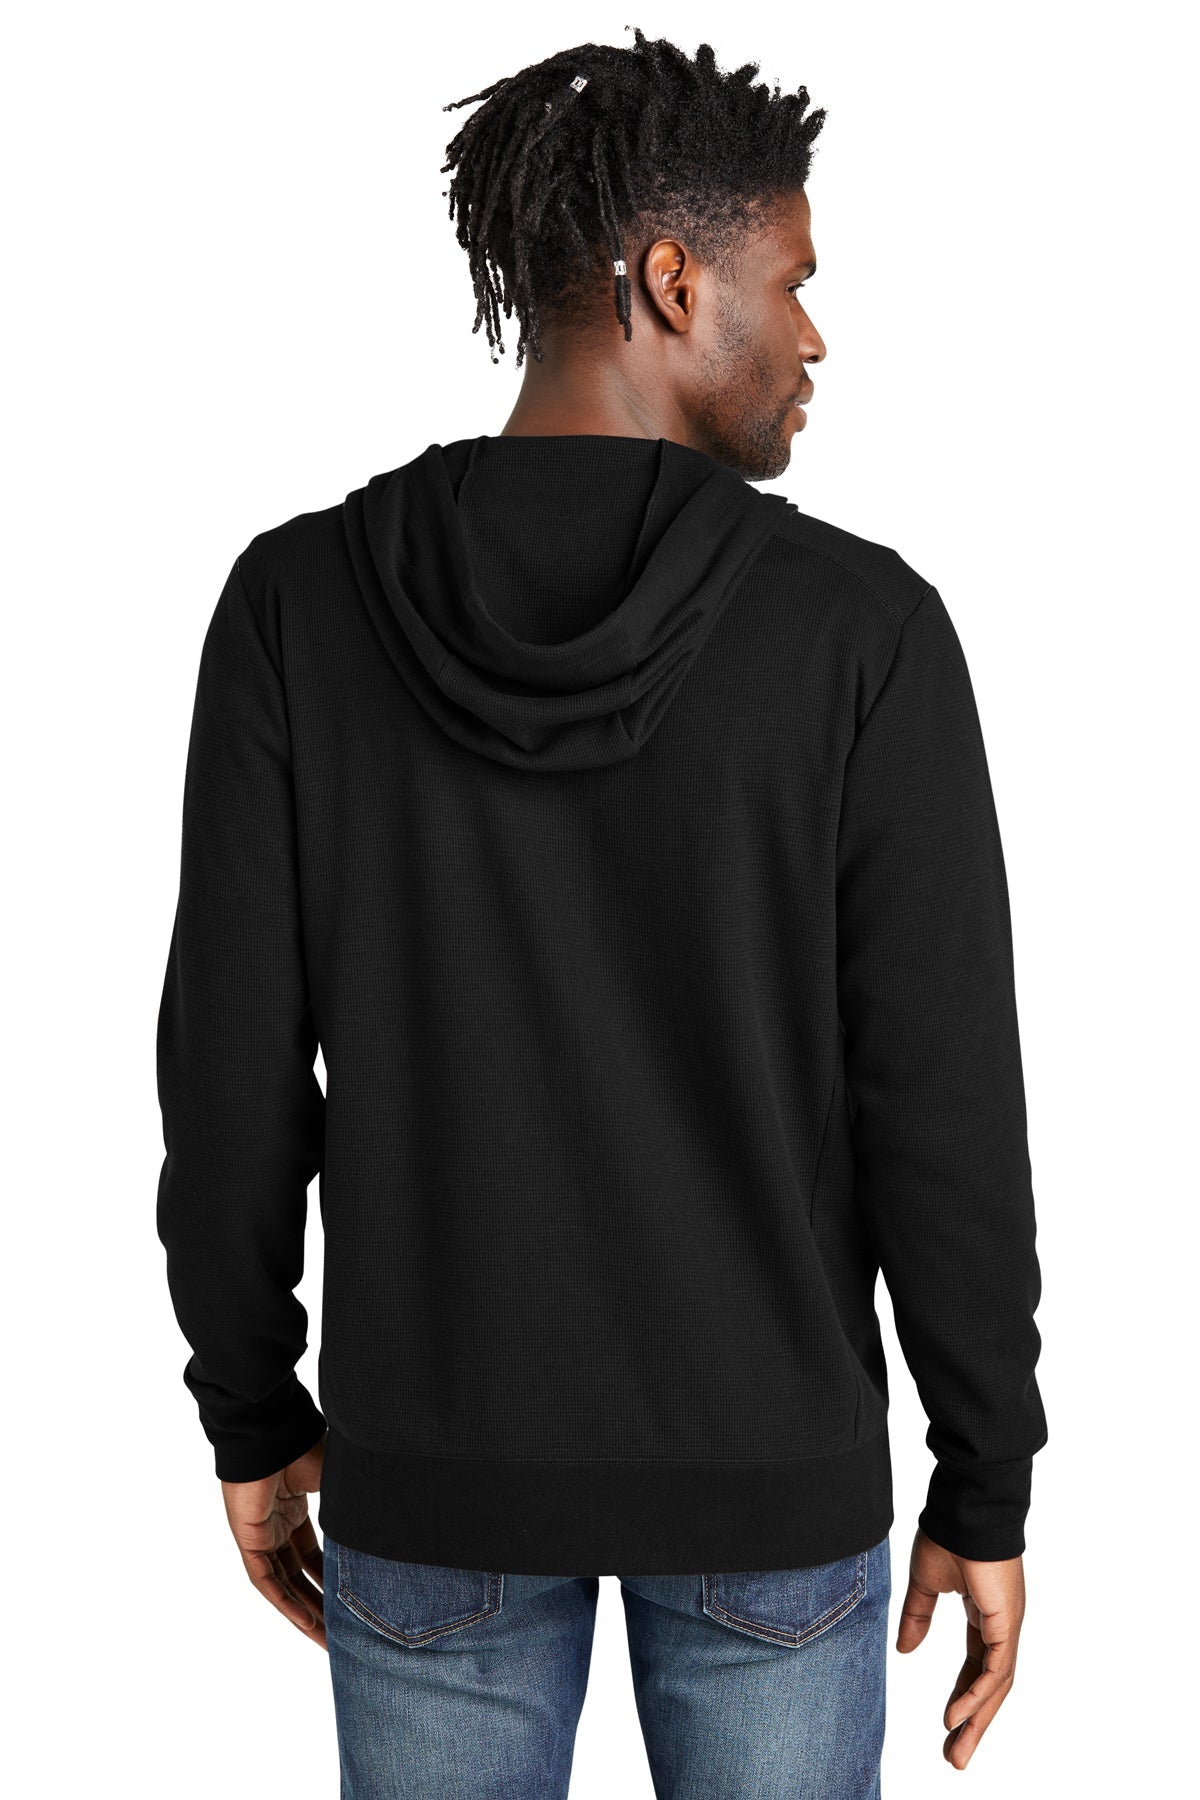 New Era Thermal Full-Zip Custom Hoodies, Black